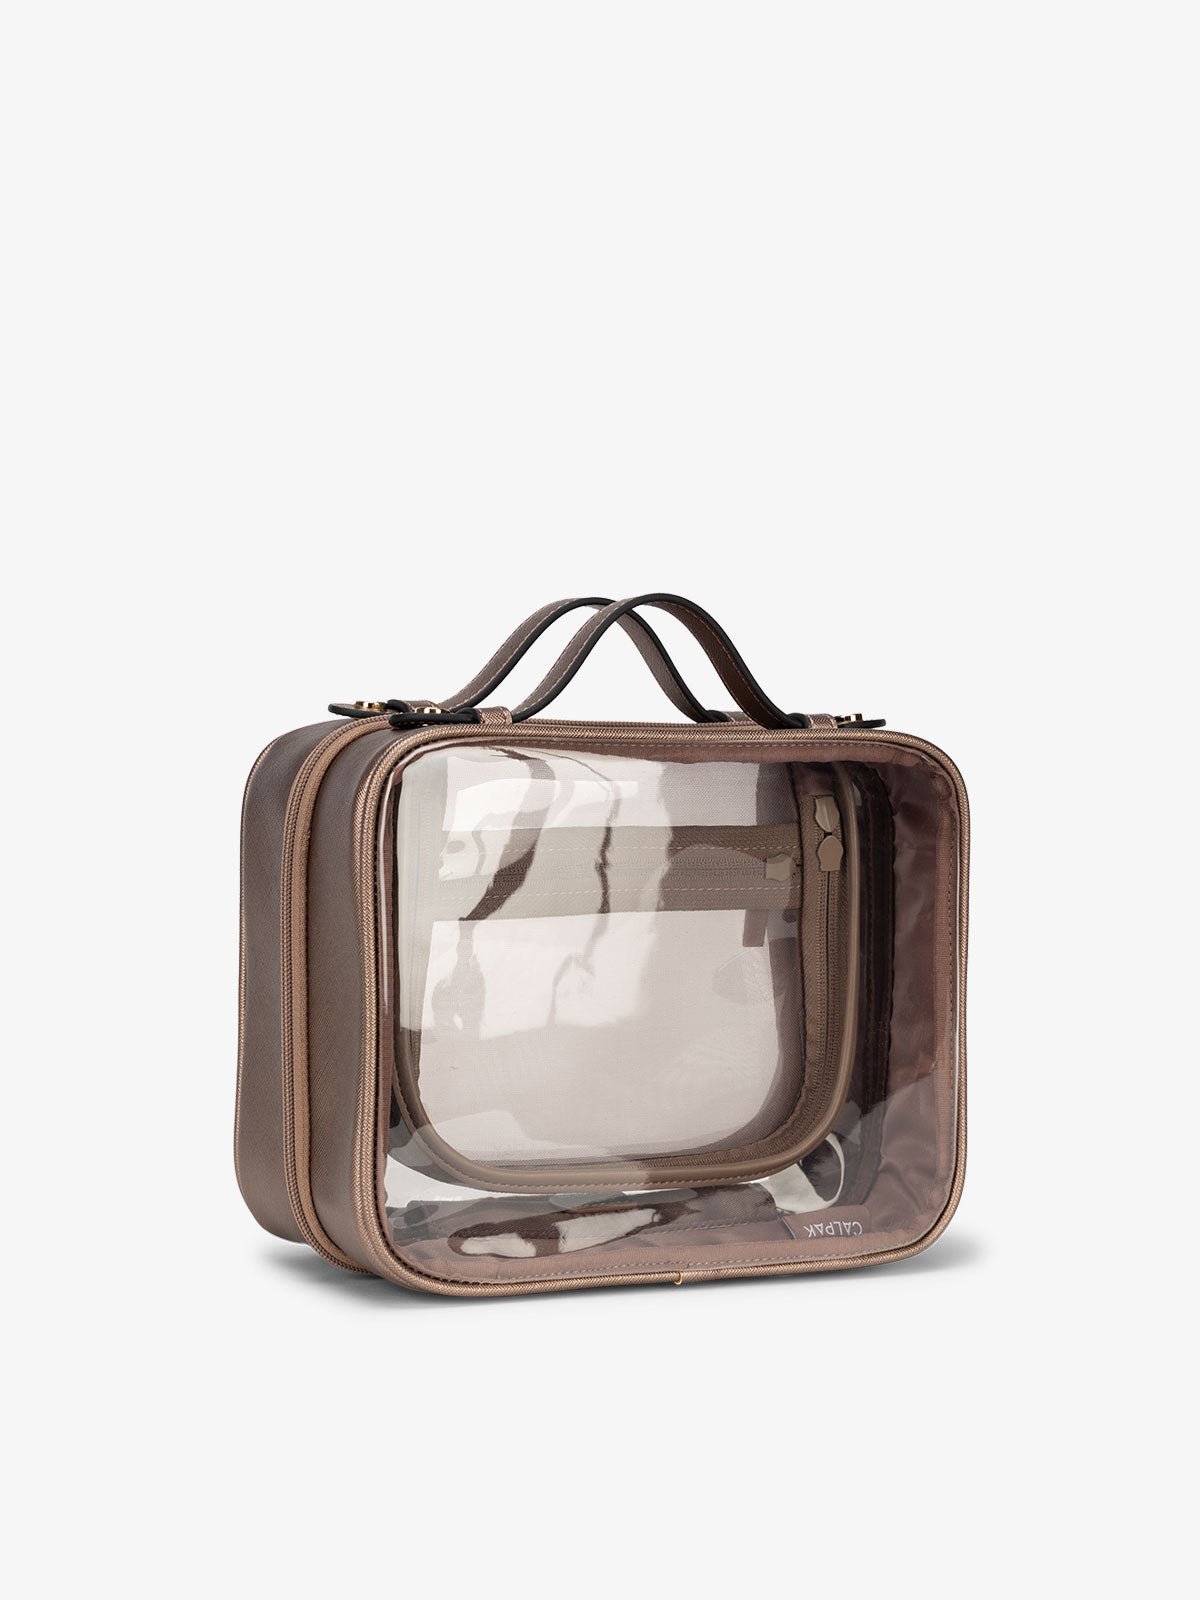 CALPAK clear makeup bag with top handles in bronze